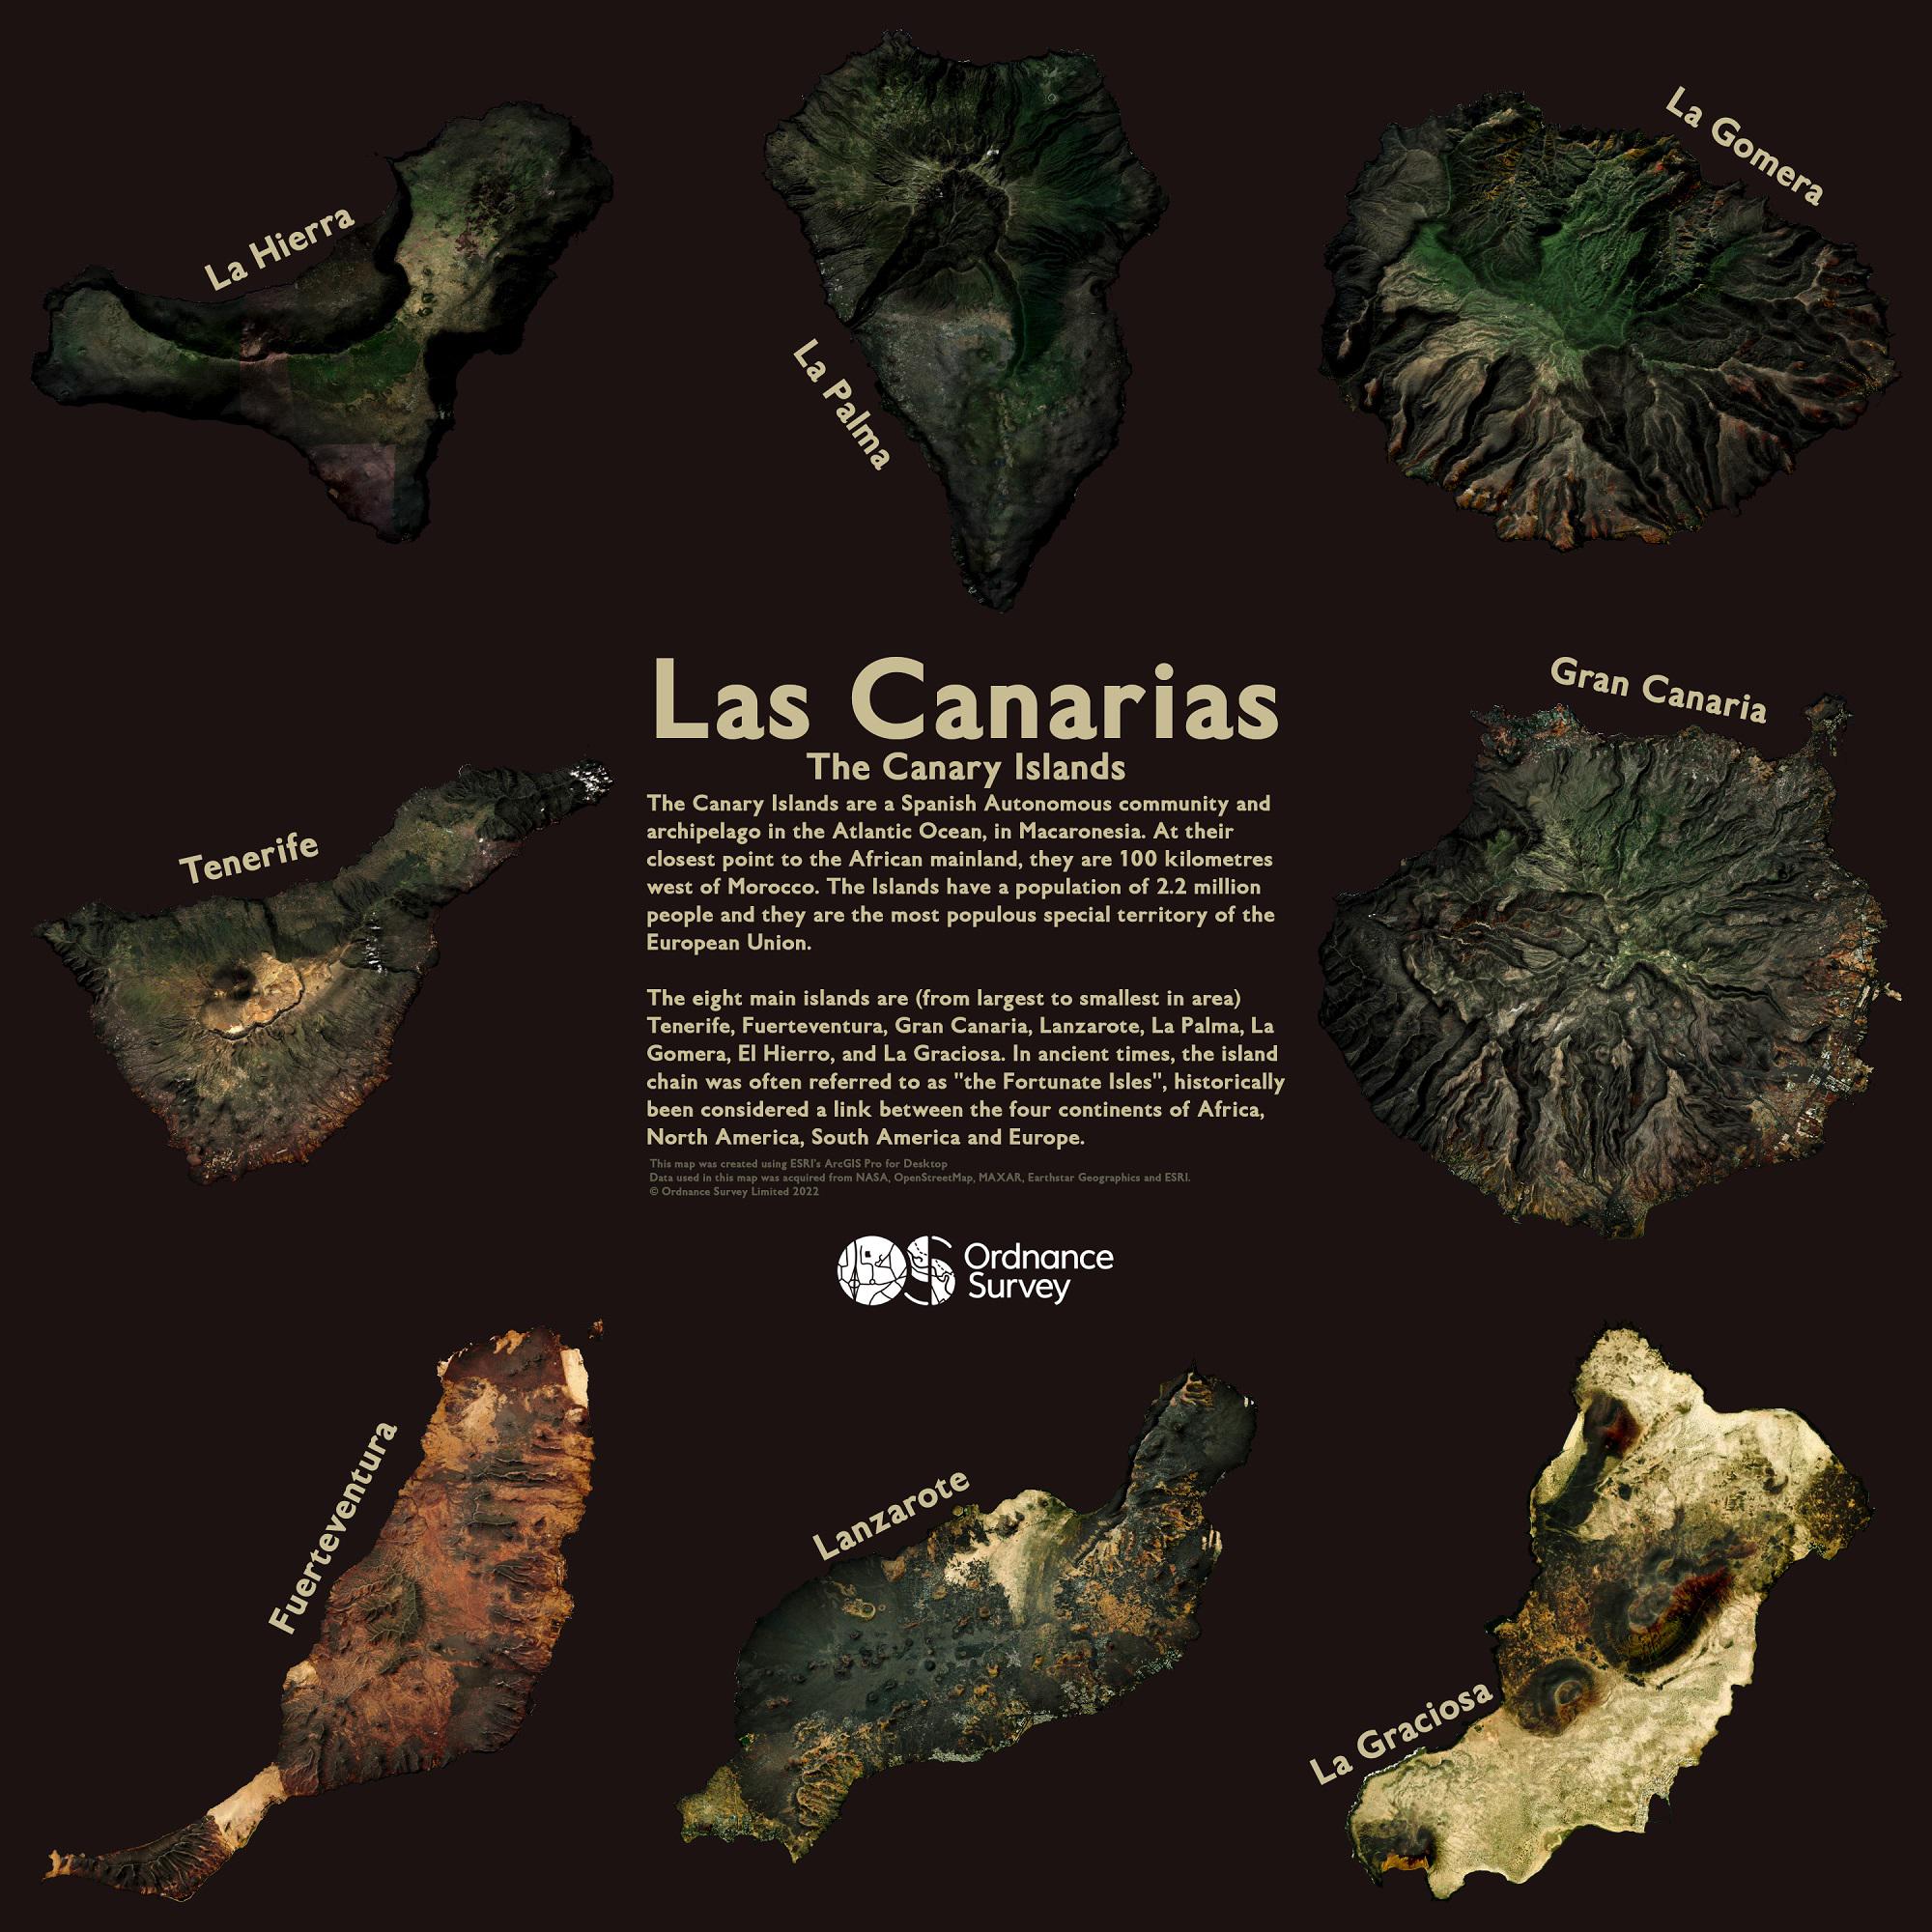 Las Canarias – The Canary Islands, Myles Colling